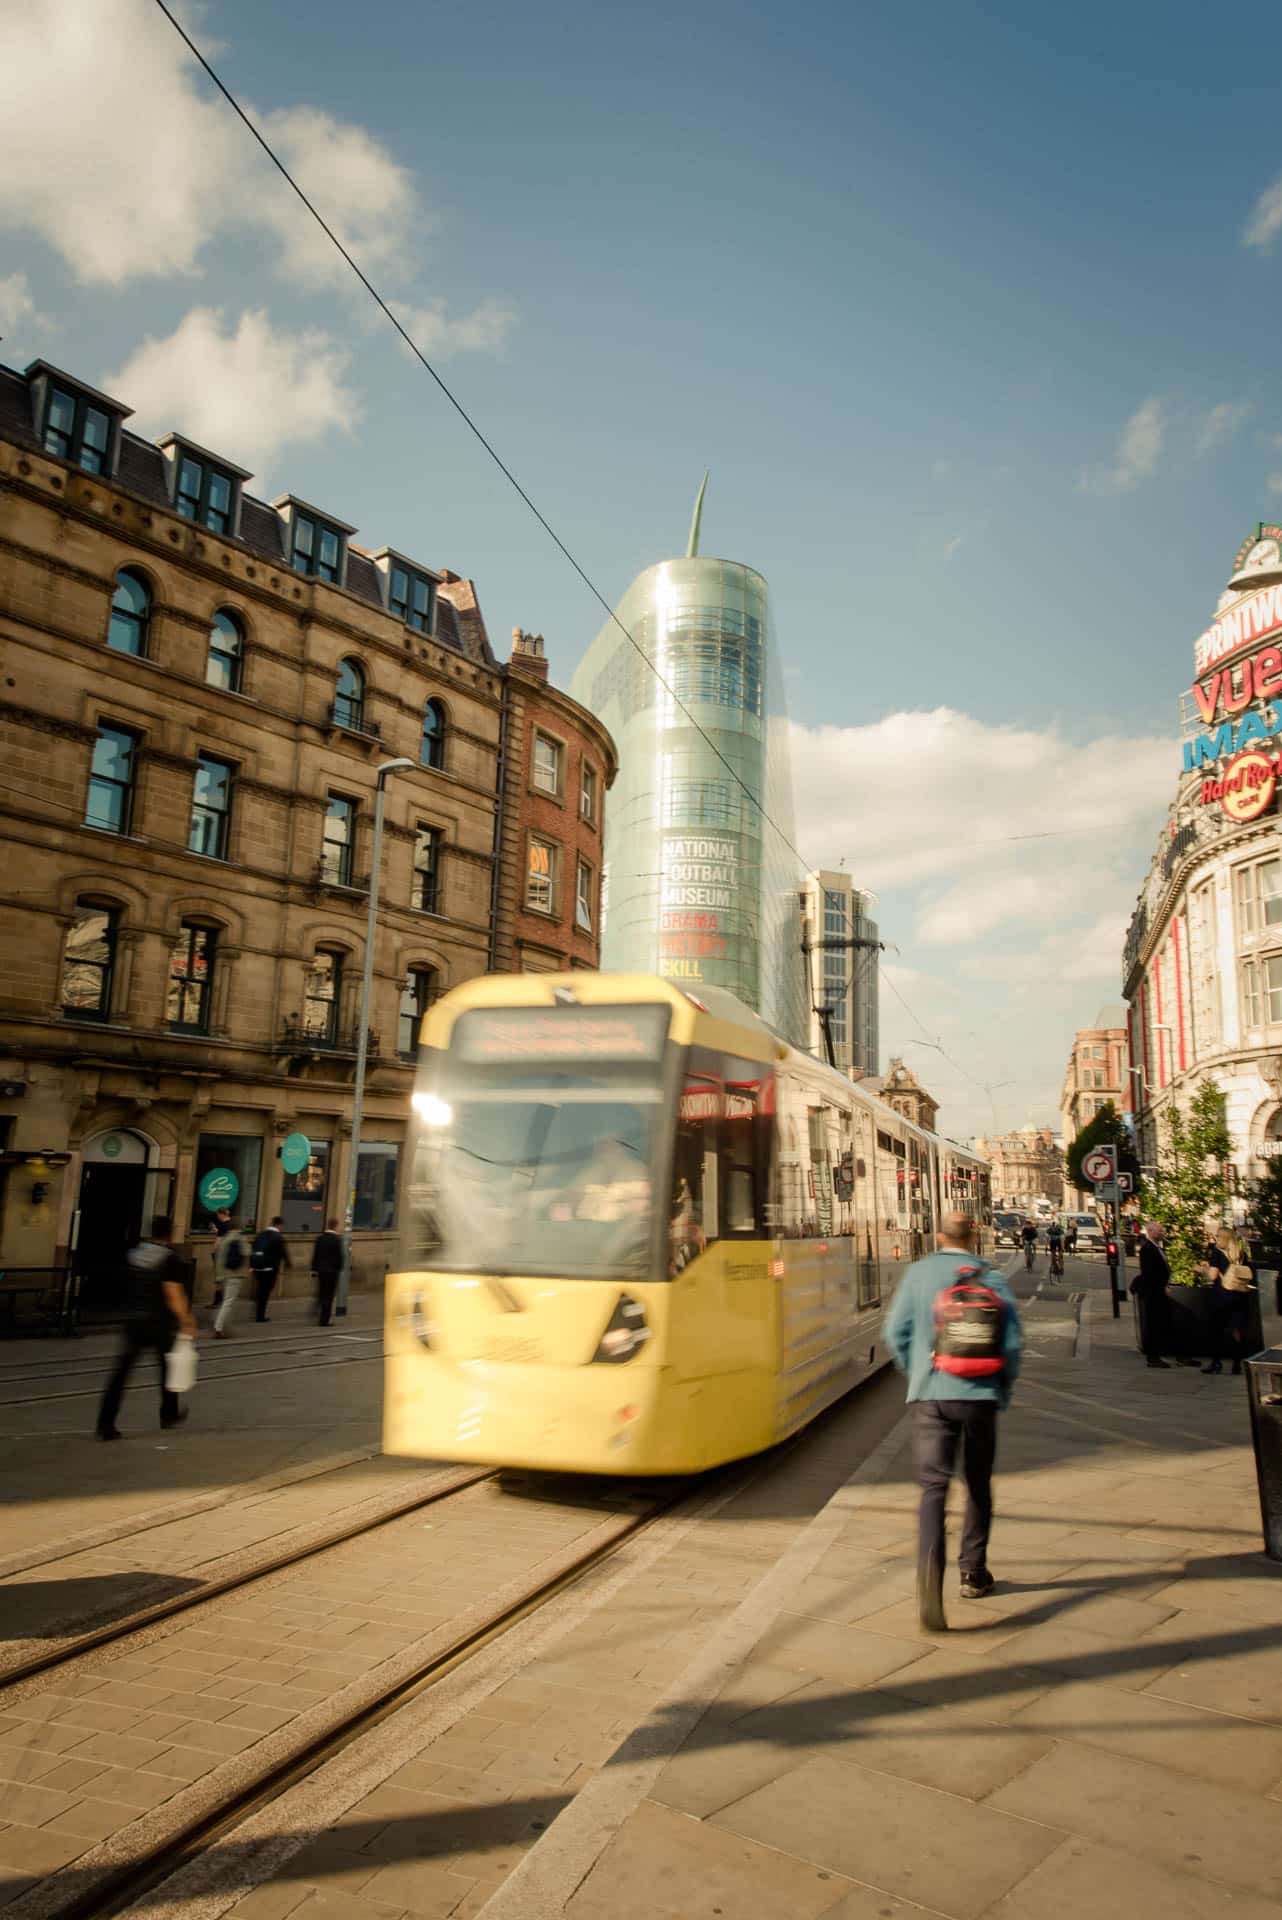 PREMIER SUITES Manchester tram in city centre